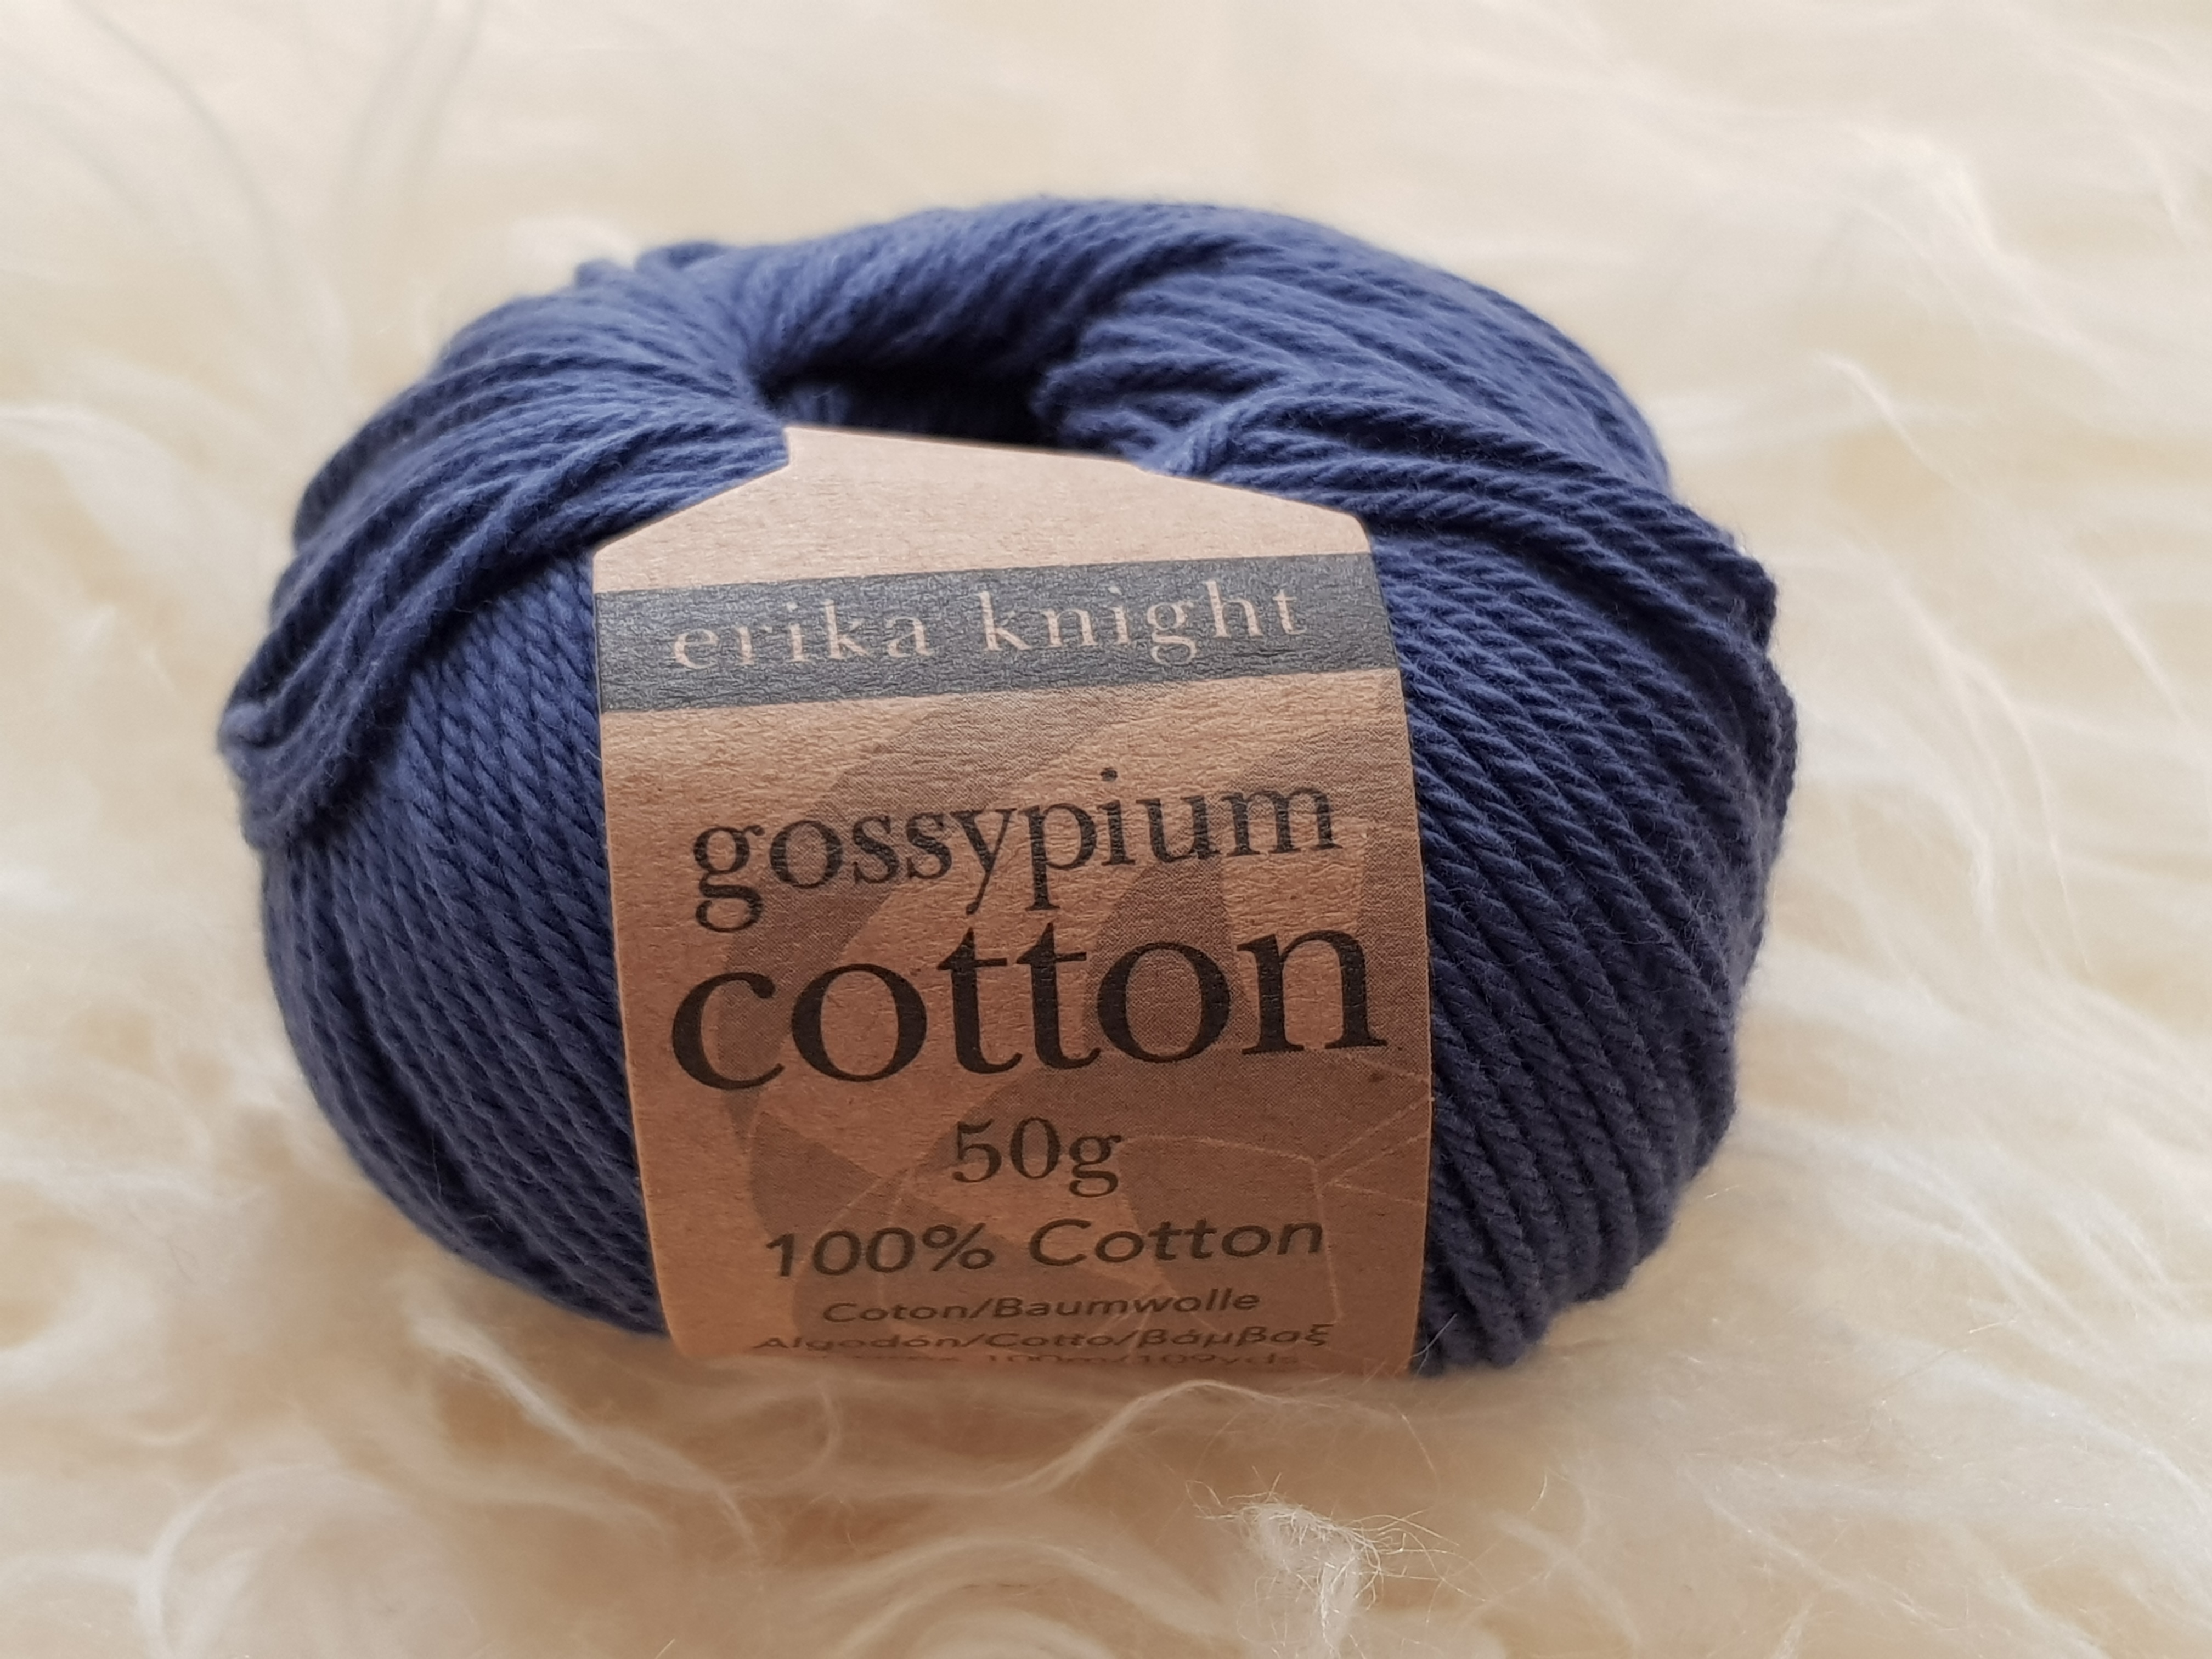 Erika Knight Gossypium Cotton